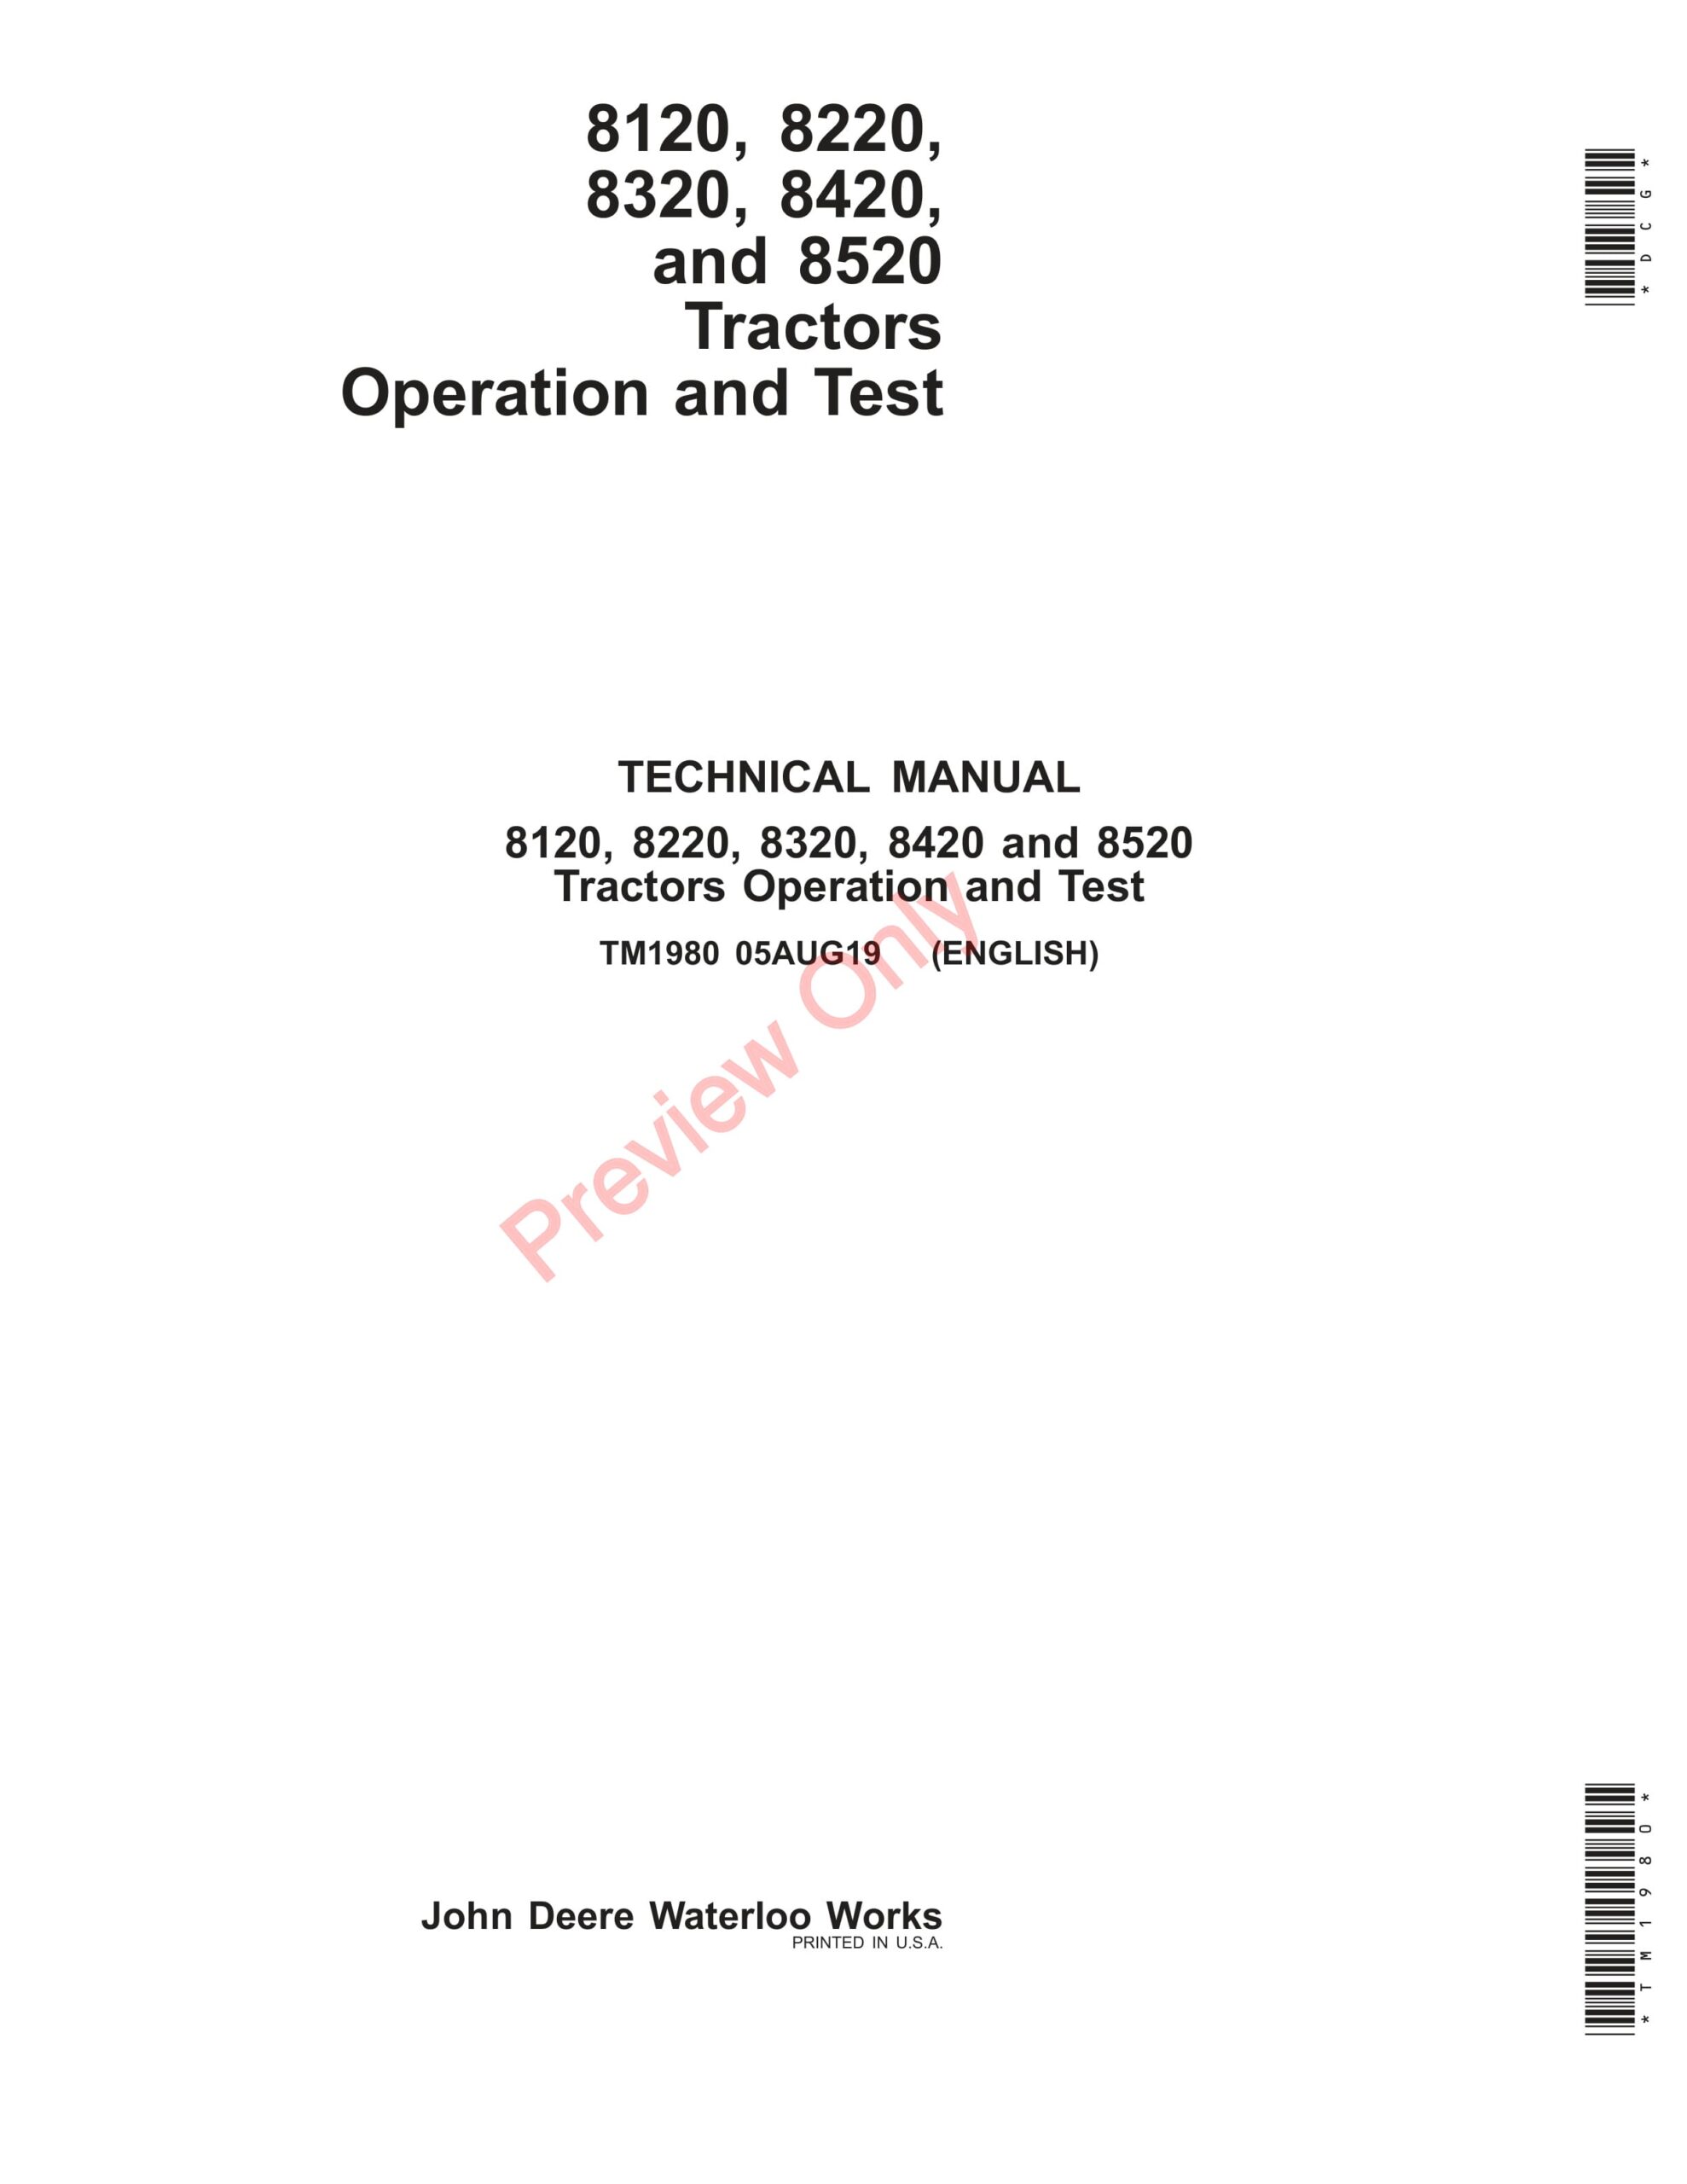 John Deere 8120, 8220, 8320, 8420, and 8520 Tractors Technical Manual TM1980 05AUG19-1